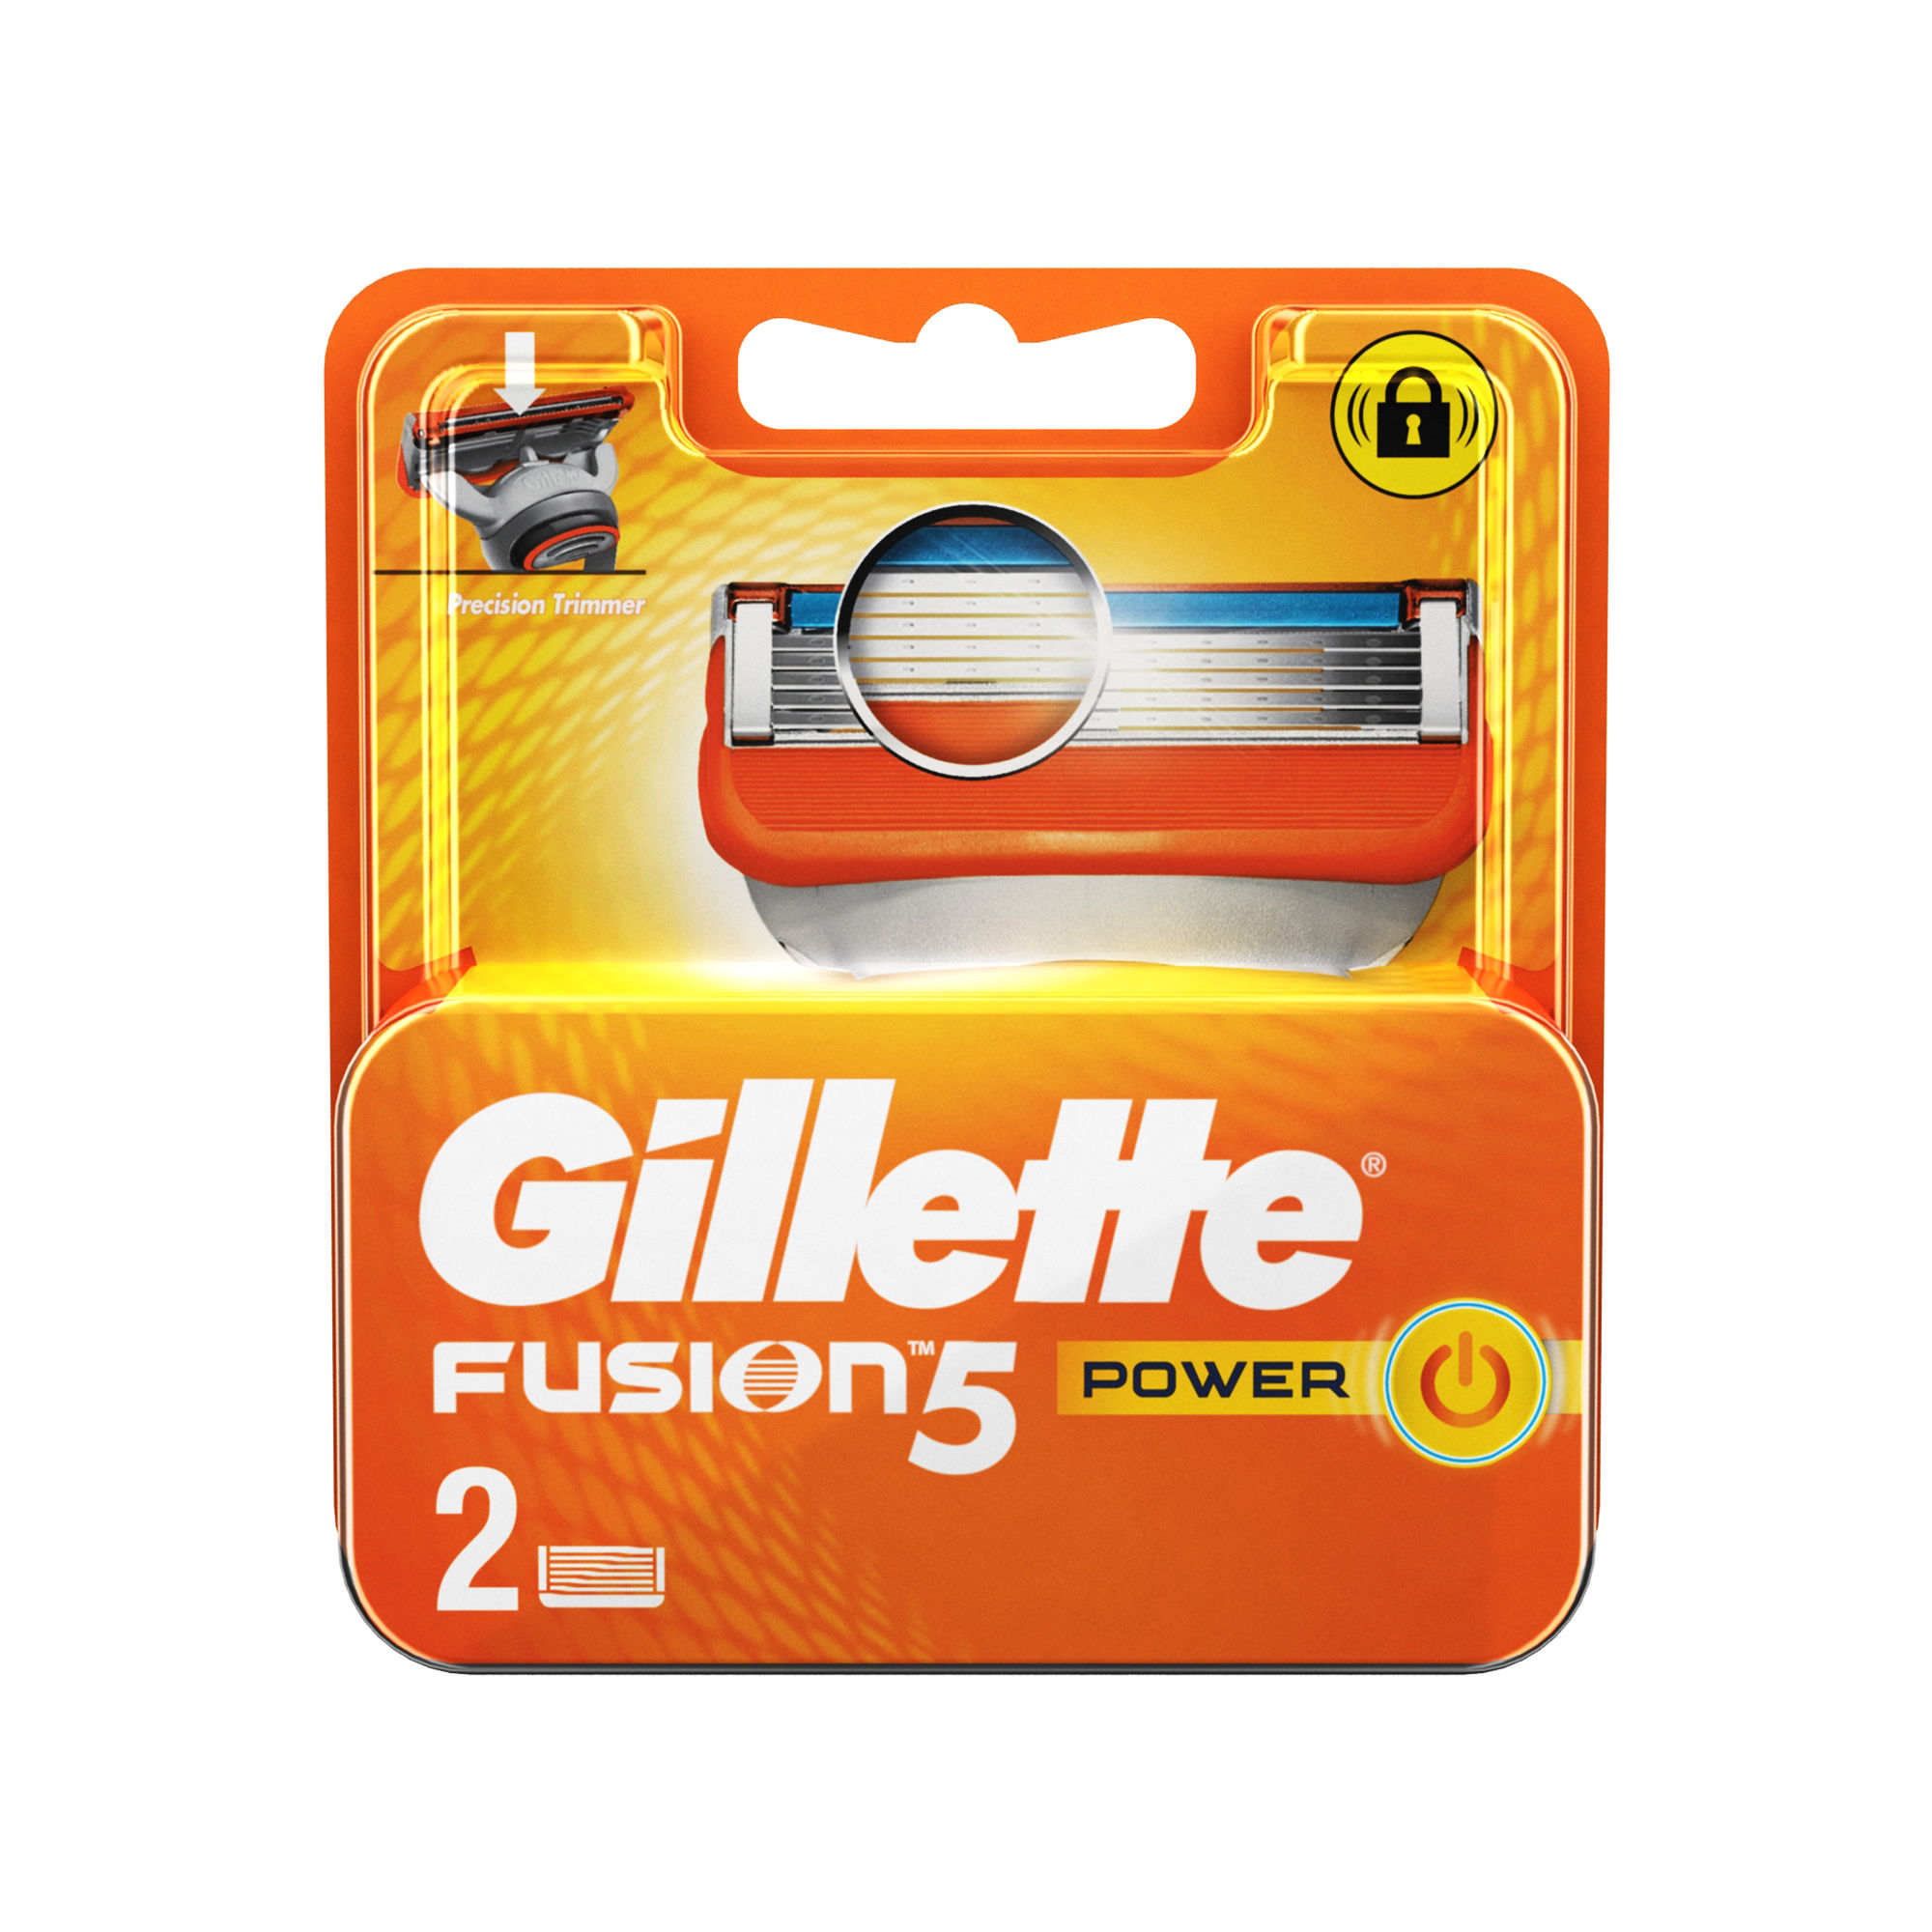 Gillette Fusion Power shaving Razor Blades (Cartridge) 2s pack